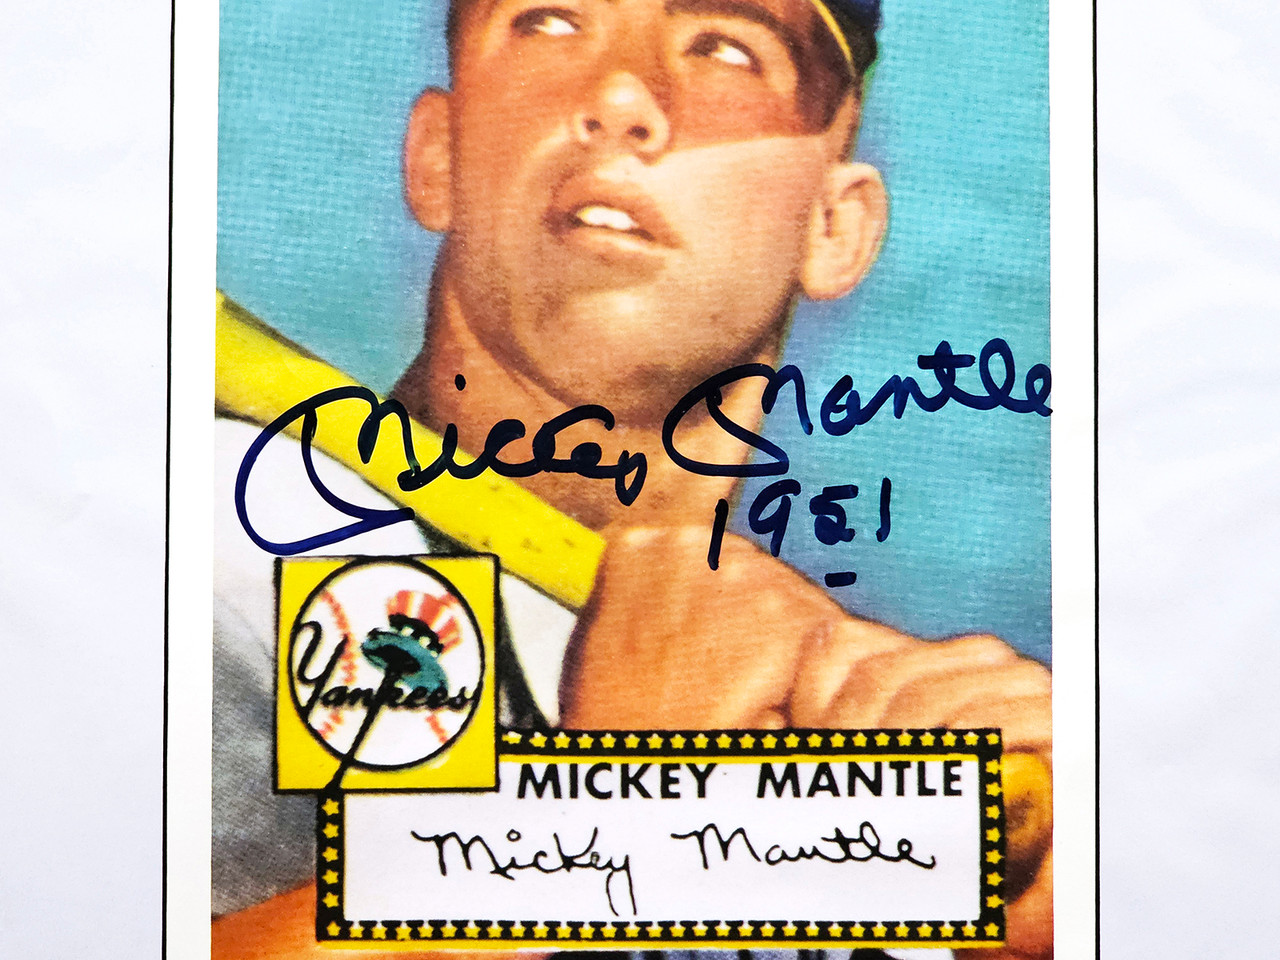 Mickey Mantle Autographed Framed 1952 Topps Baseball Rookie Card #311 11x14  Photo Reprint New York Yankees 1951 Beckett BAS #AC74554